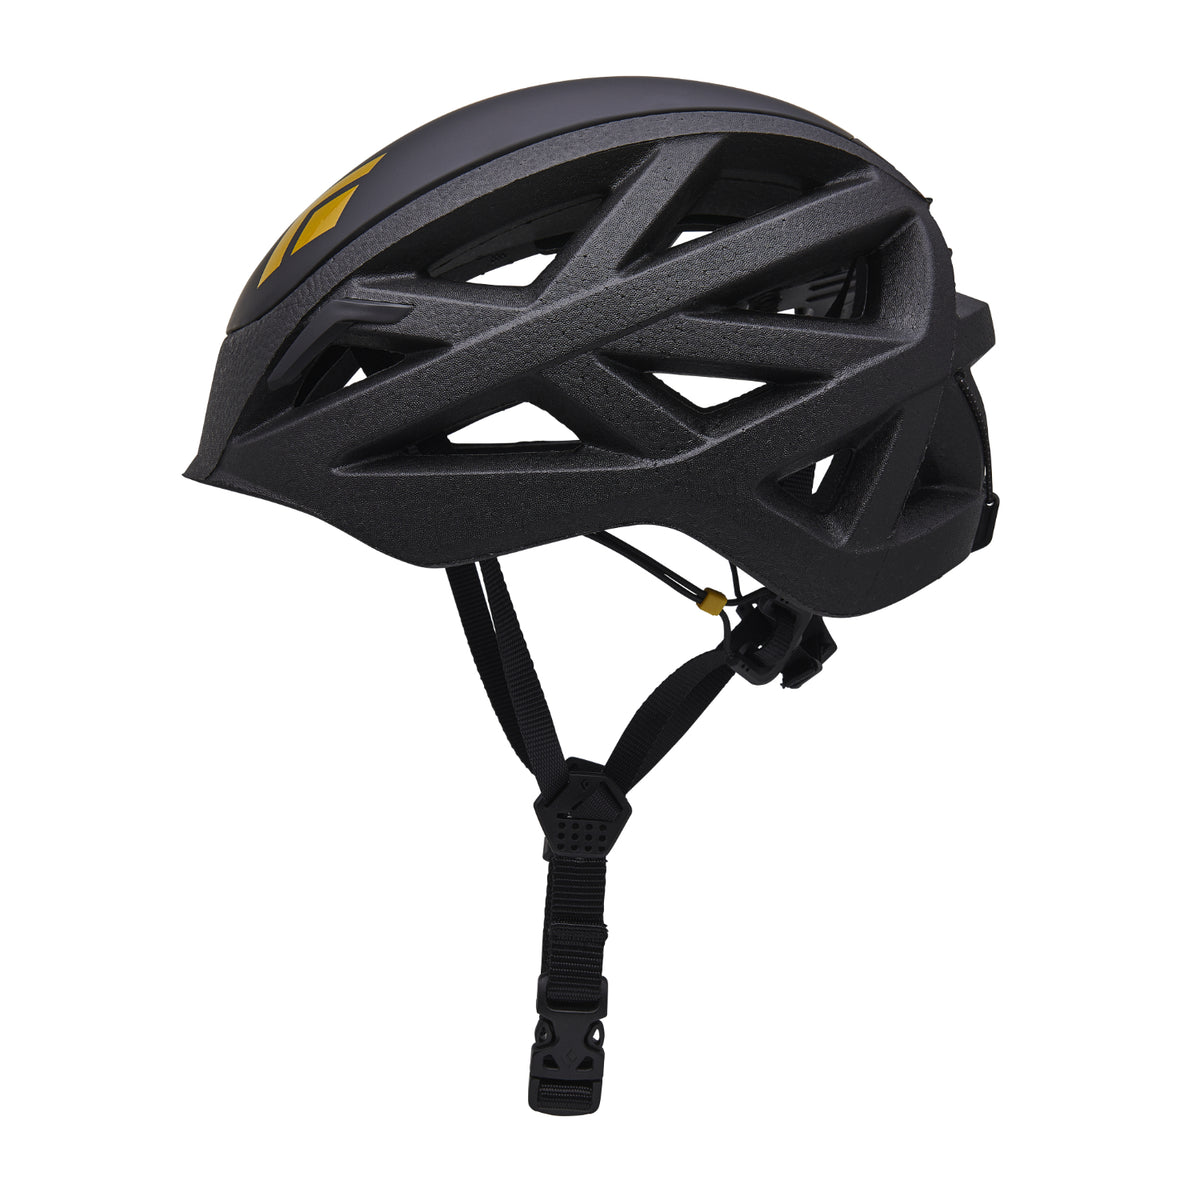 Black Diamond Vapor helmet in black with a gold logo shoqing side view